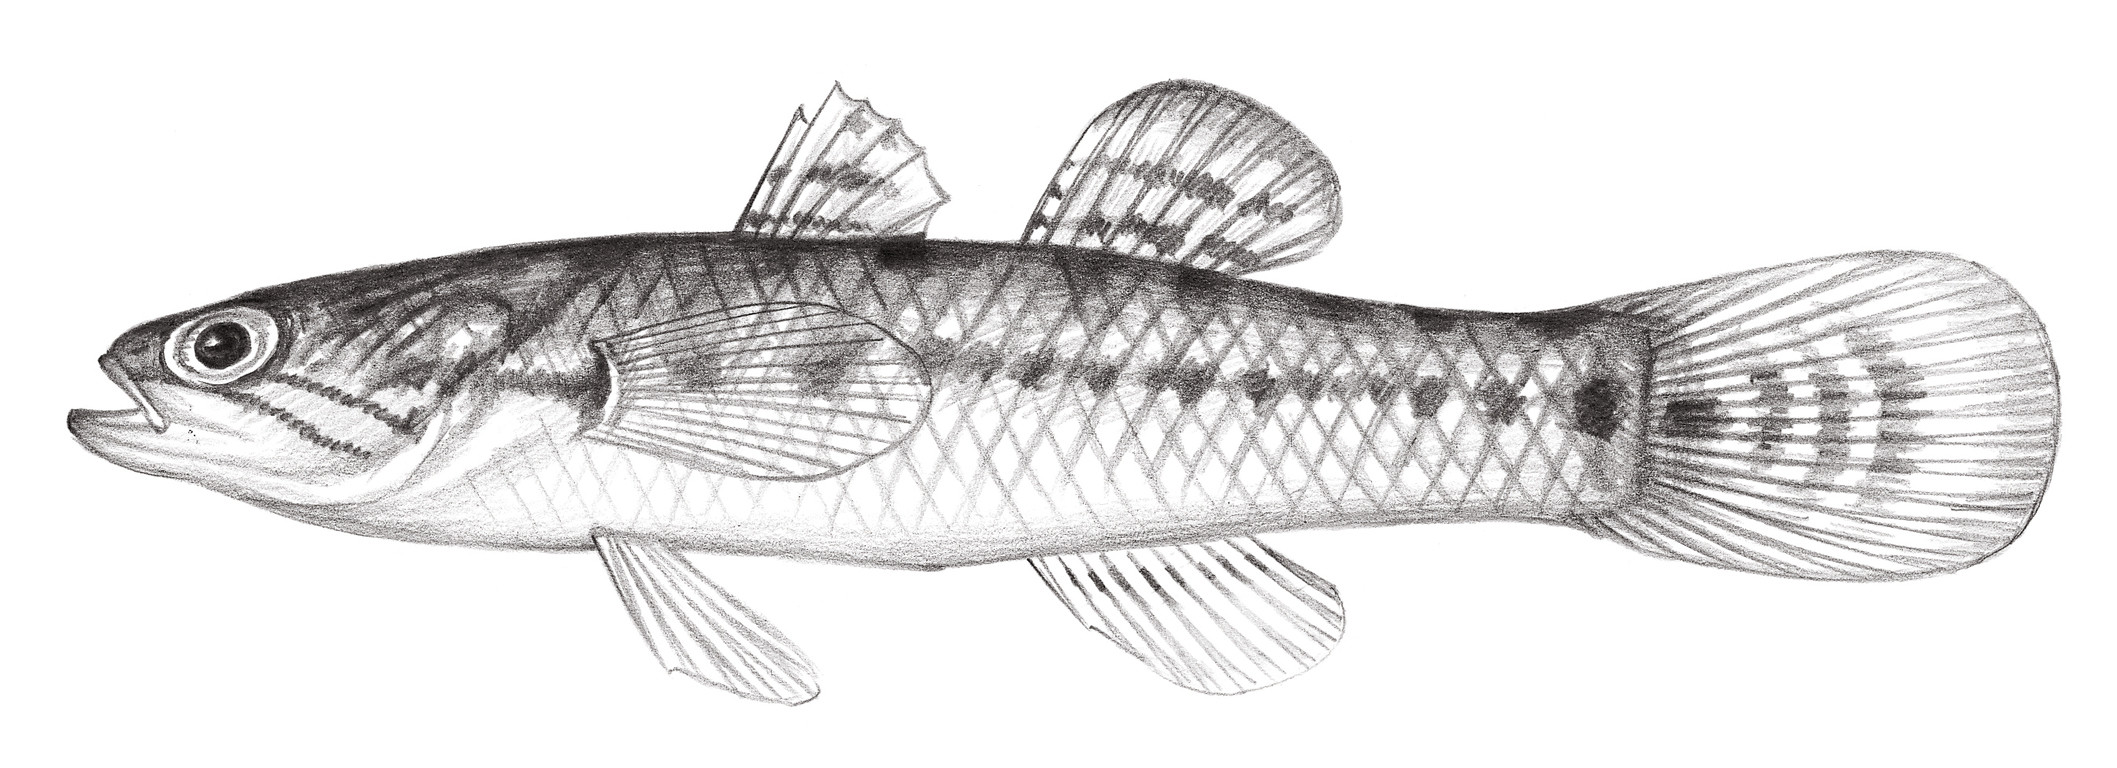 2058.	無孔蛇塘鱧 Ophieleotris aporos (Bleeker, 1854)